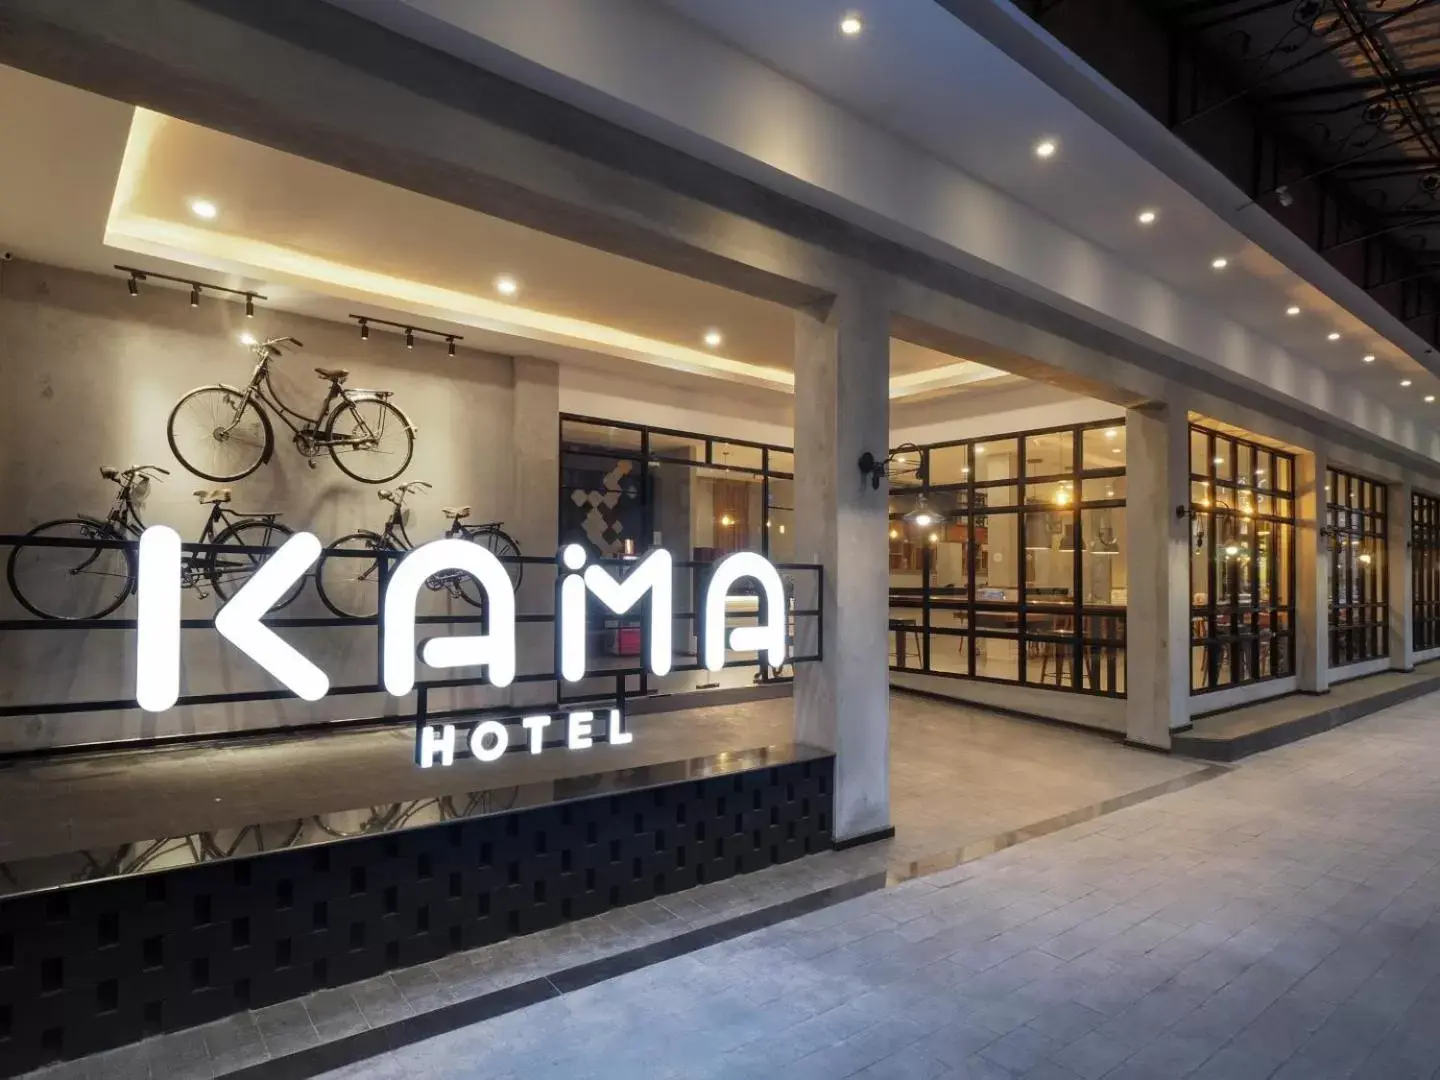 Facade/entrance in Kama Hotel